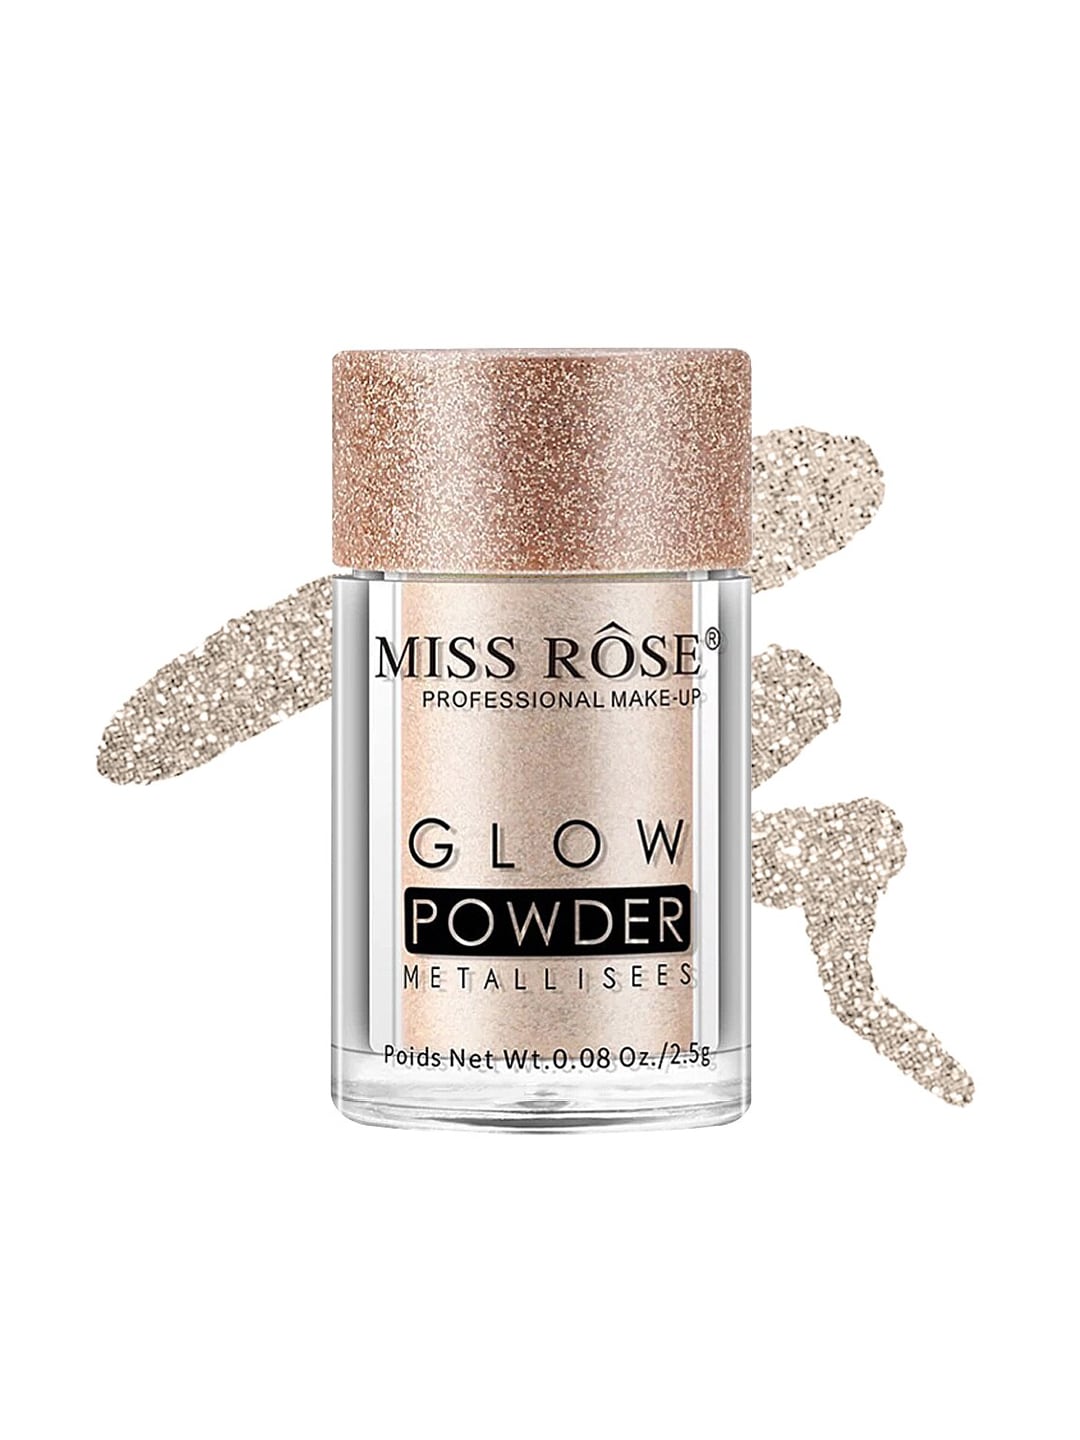 MISS ROSE Single Eyeshadow Glow Powder - Metalises 7001-010M 02 Price in India